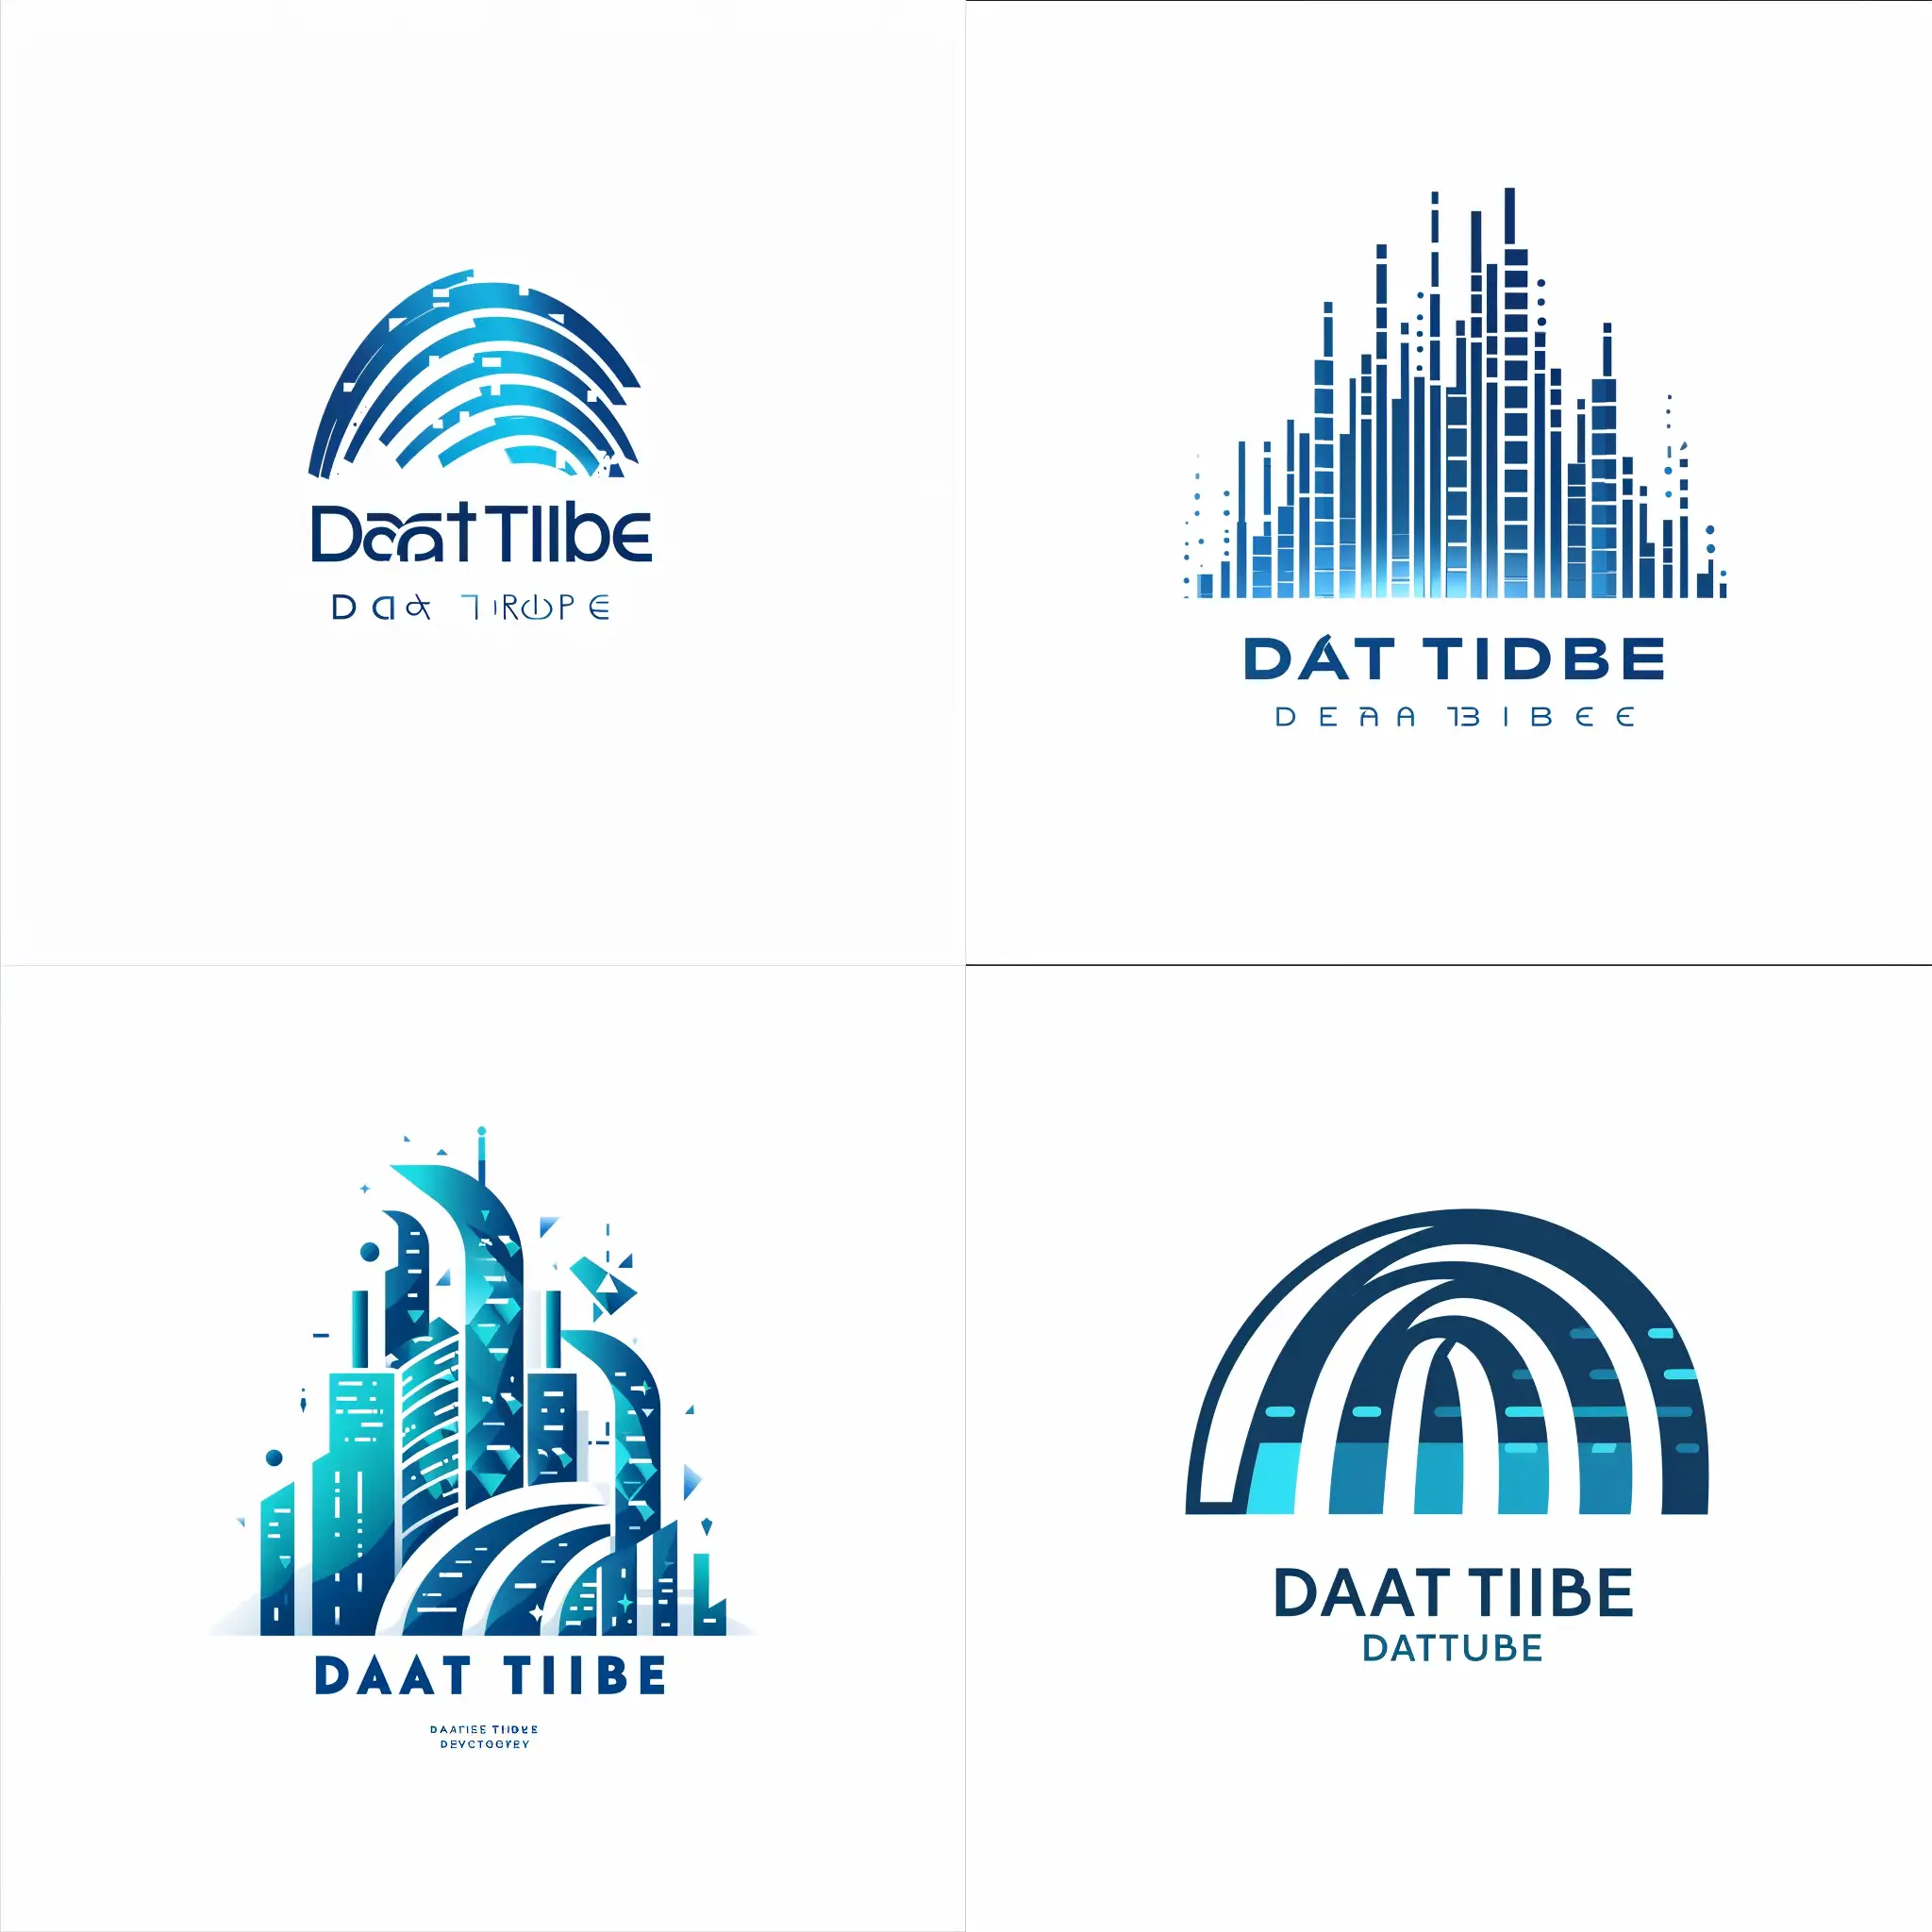 Modern-and-Dynamic-Data-Tribe-Fintech-Logo-in-Blue